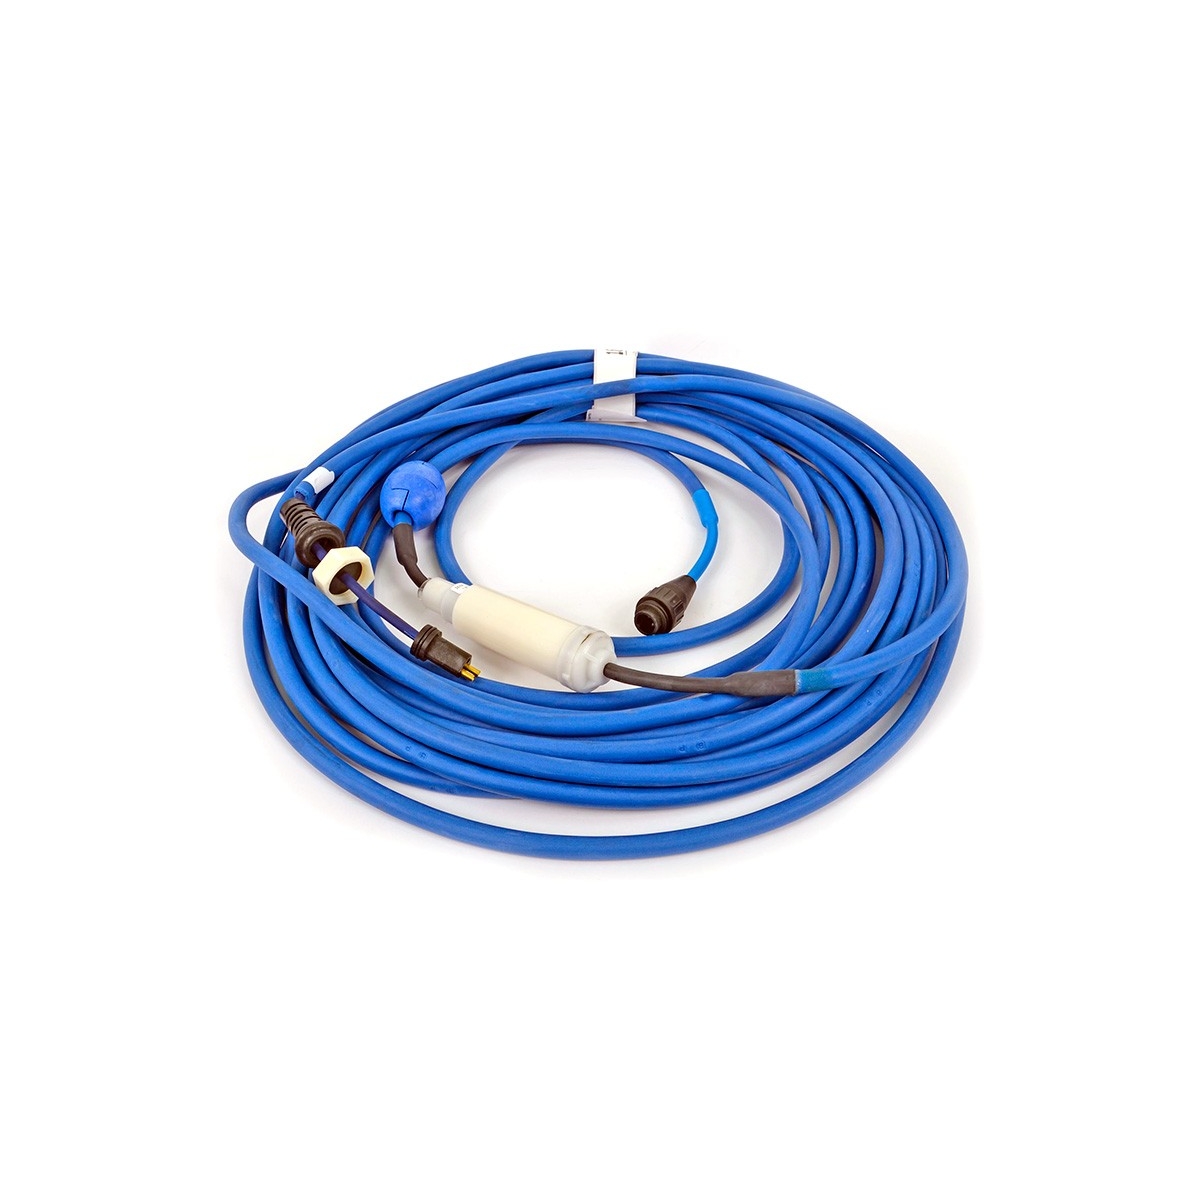 Cable flotante 18m con swivel Dolphin 9995862-DIY